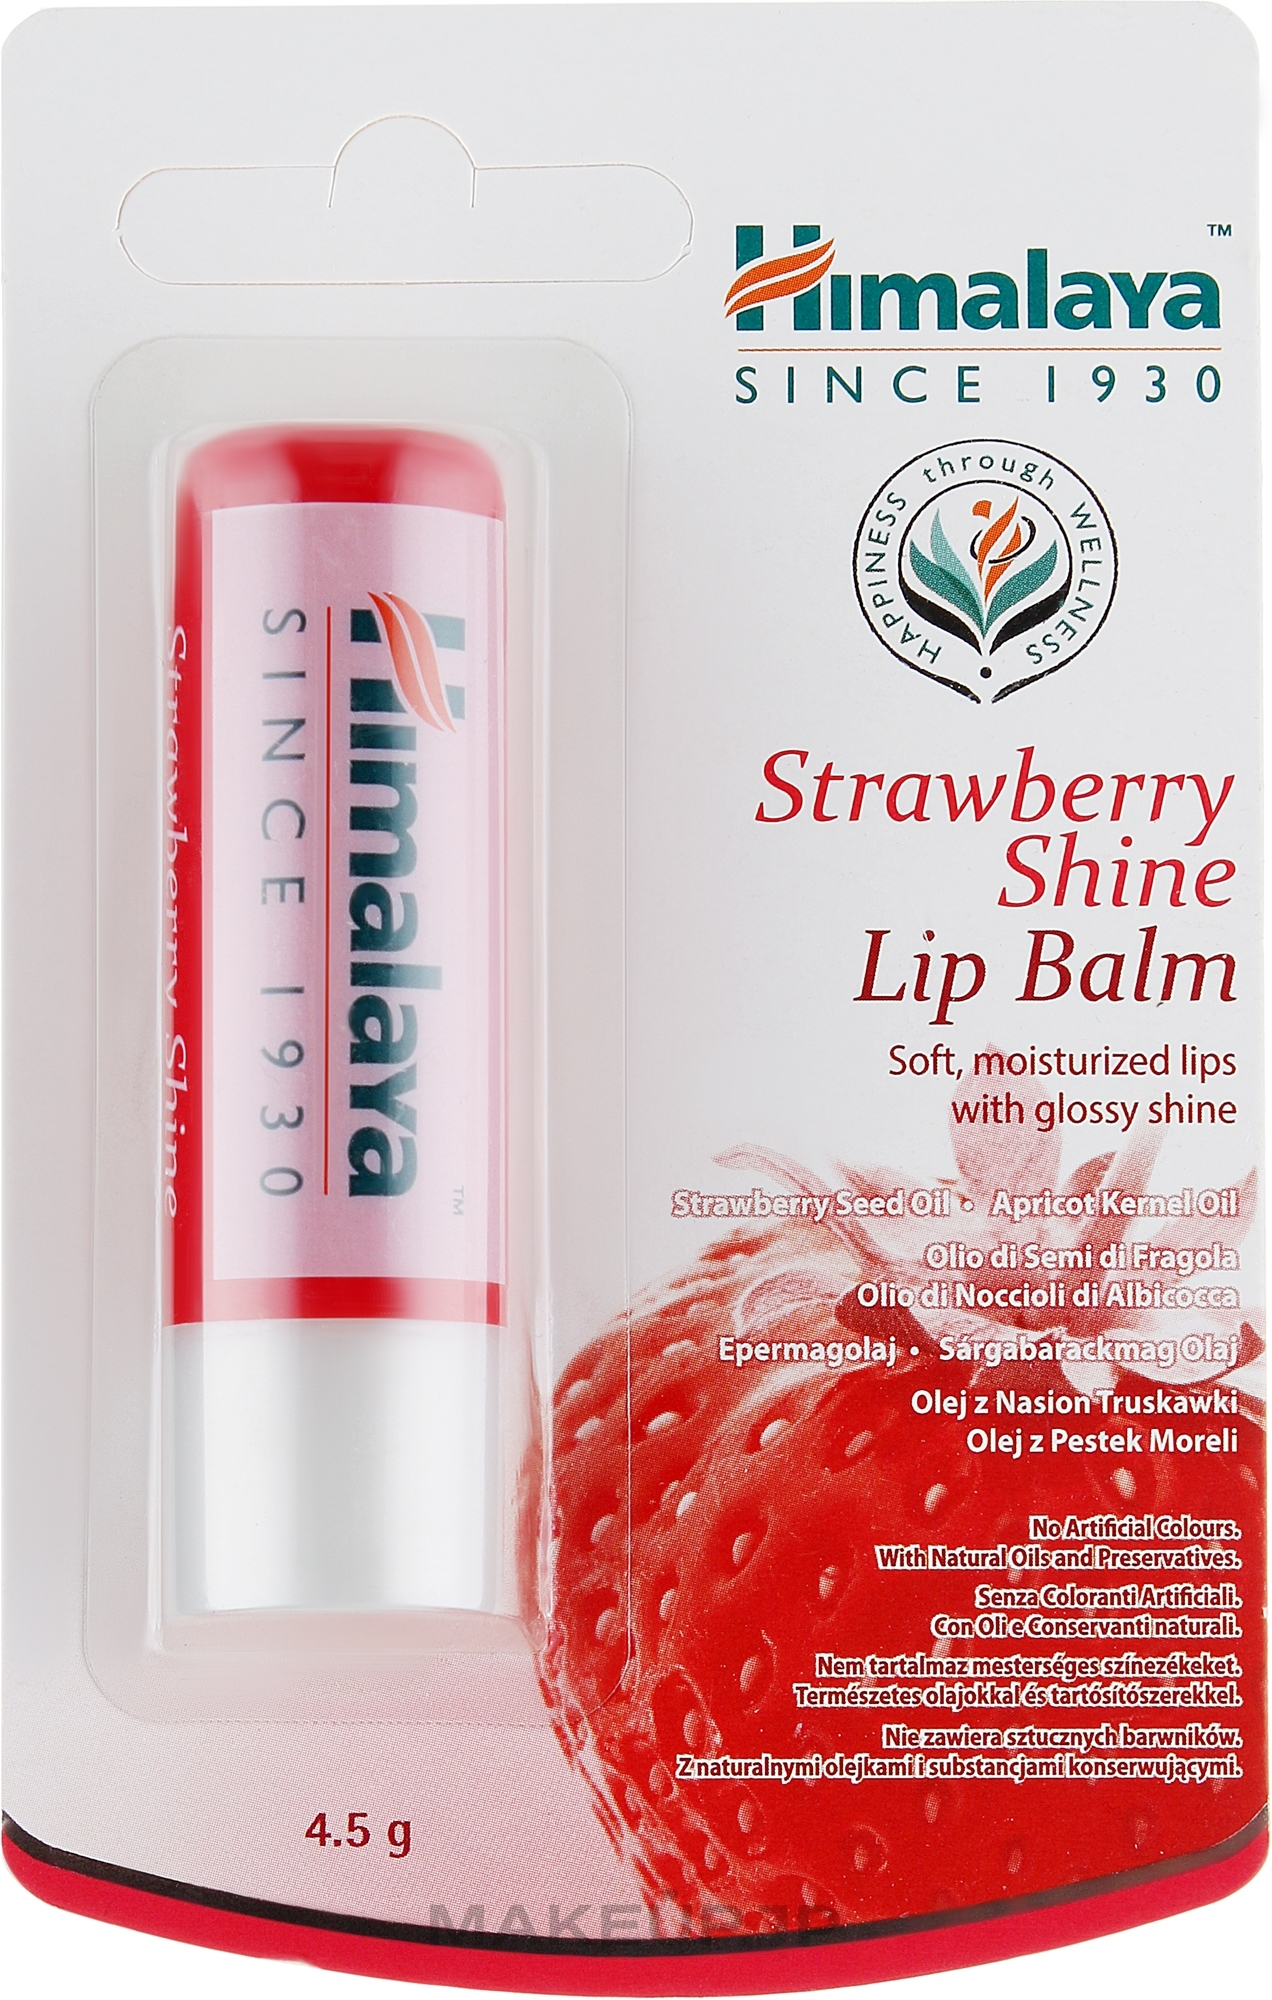 Strawberry Shine Lip Balm - Himalaya Herbals Strawberry Shine Lip Balm — photo 4.5 g